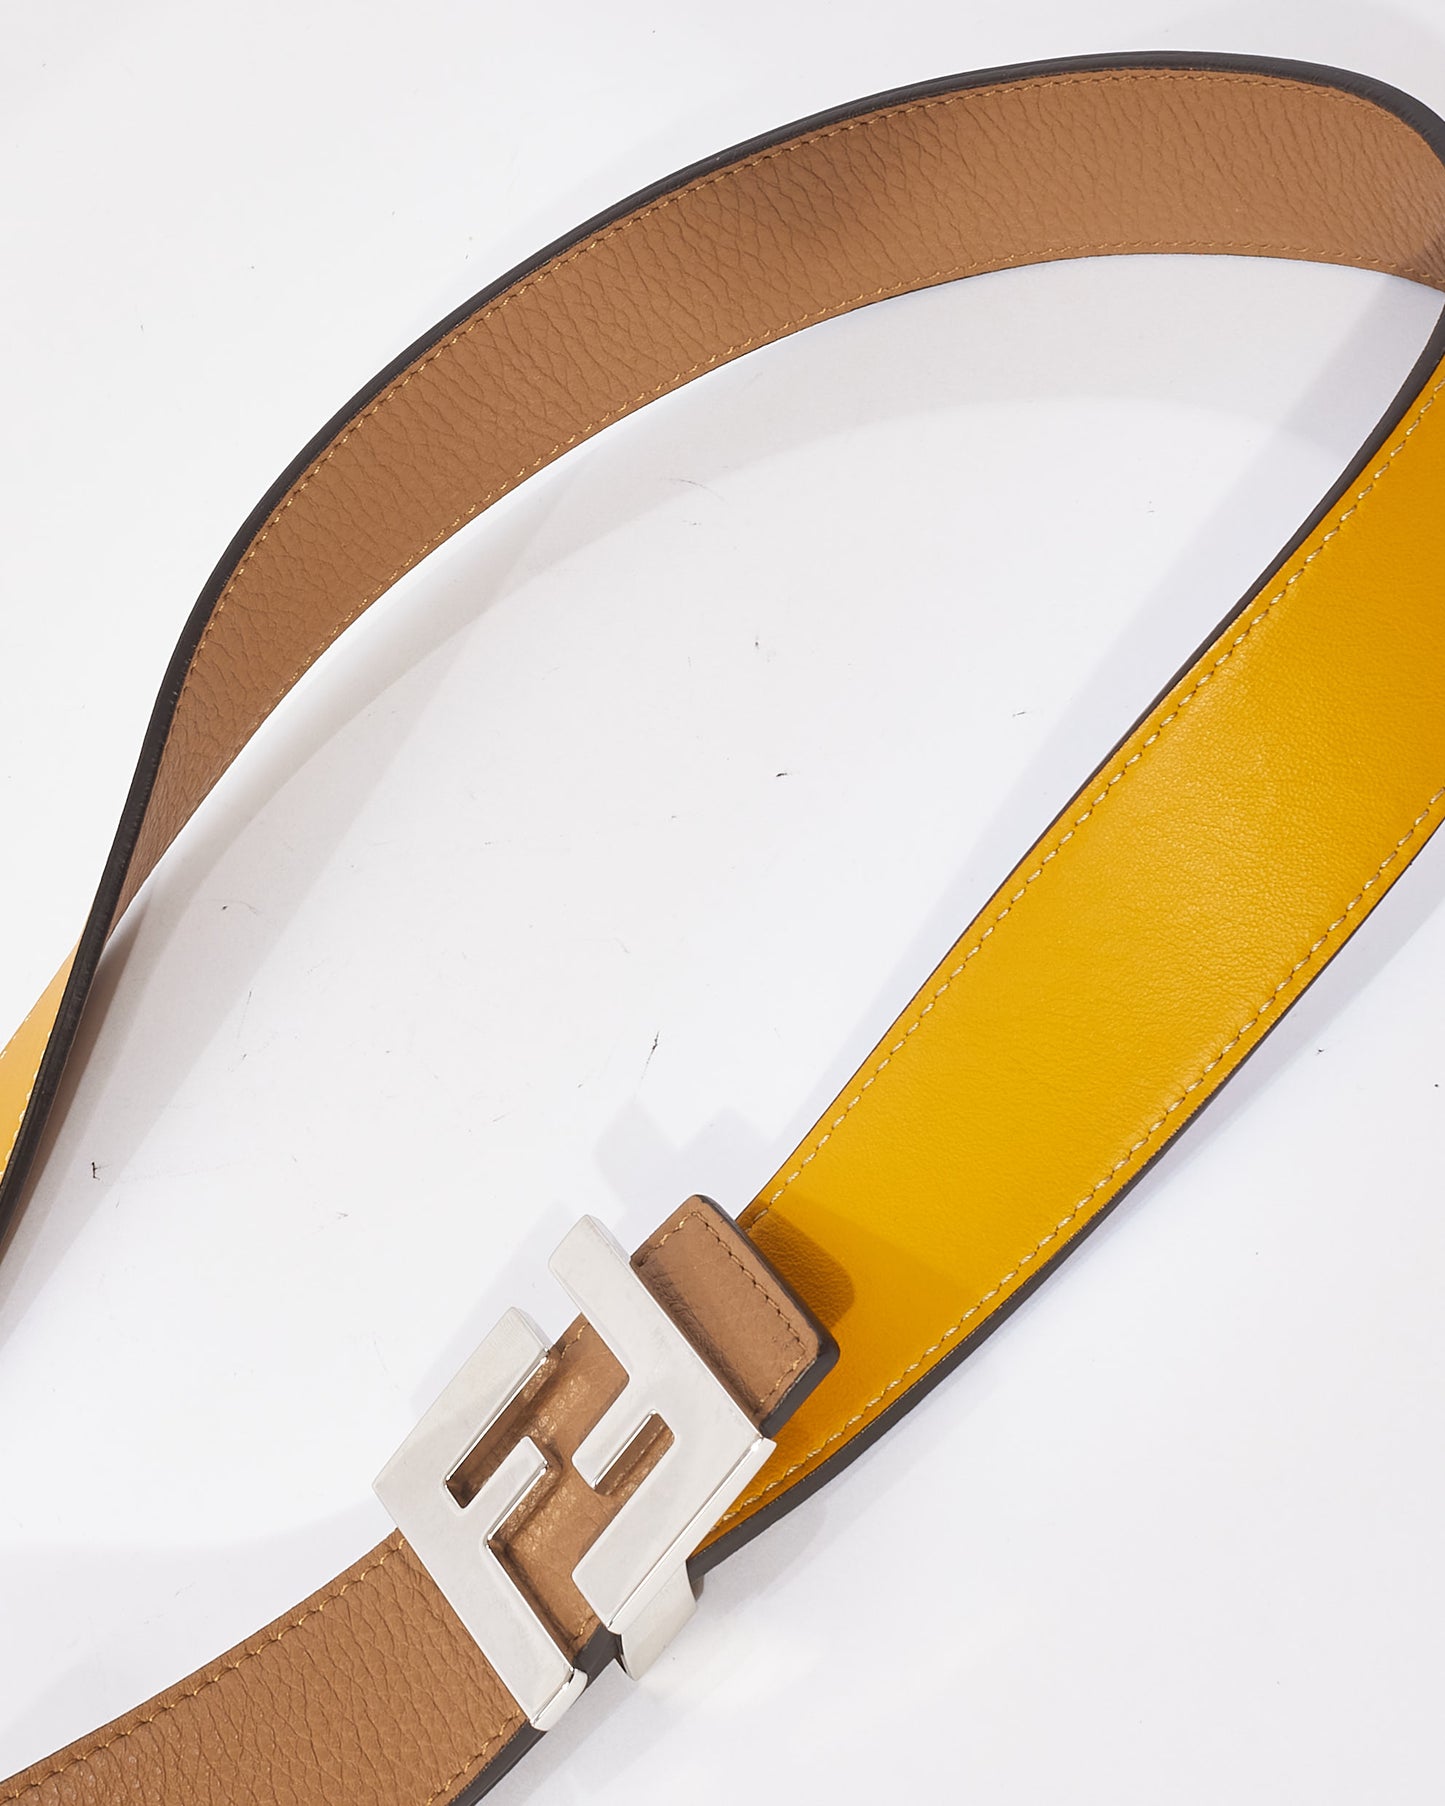 Fendi Brown/ Yellow Reversible Silver Logo Belt - 100